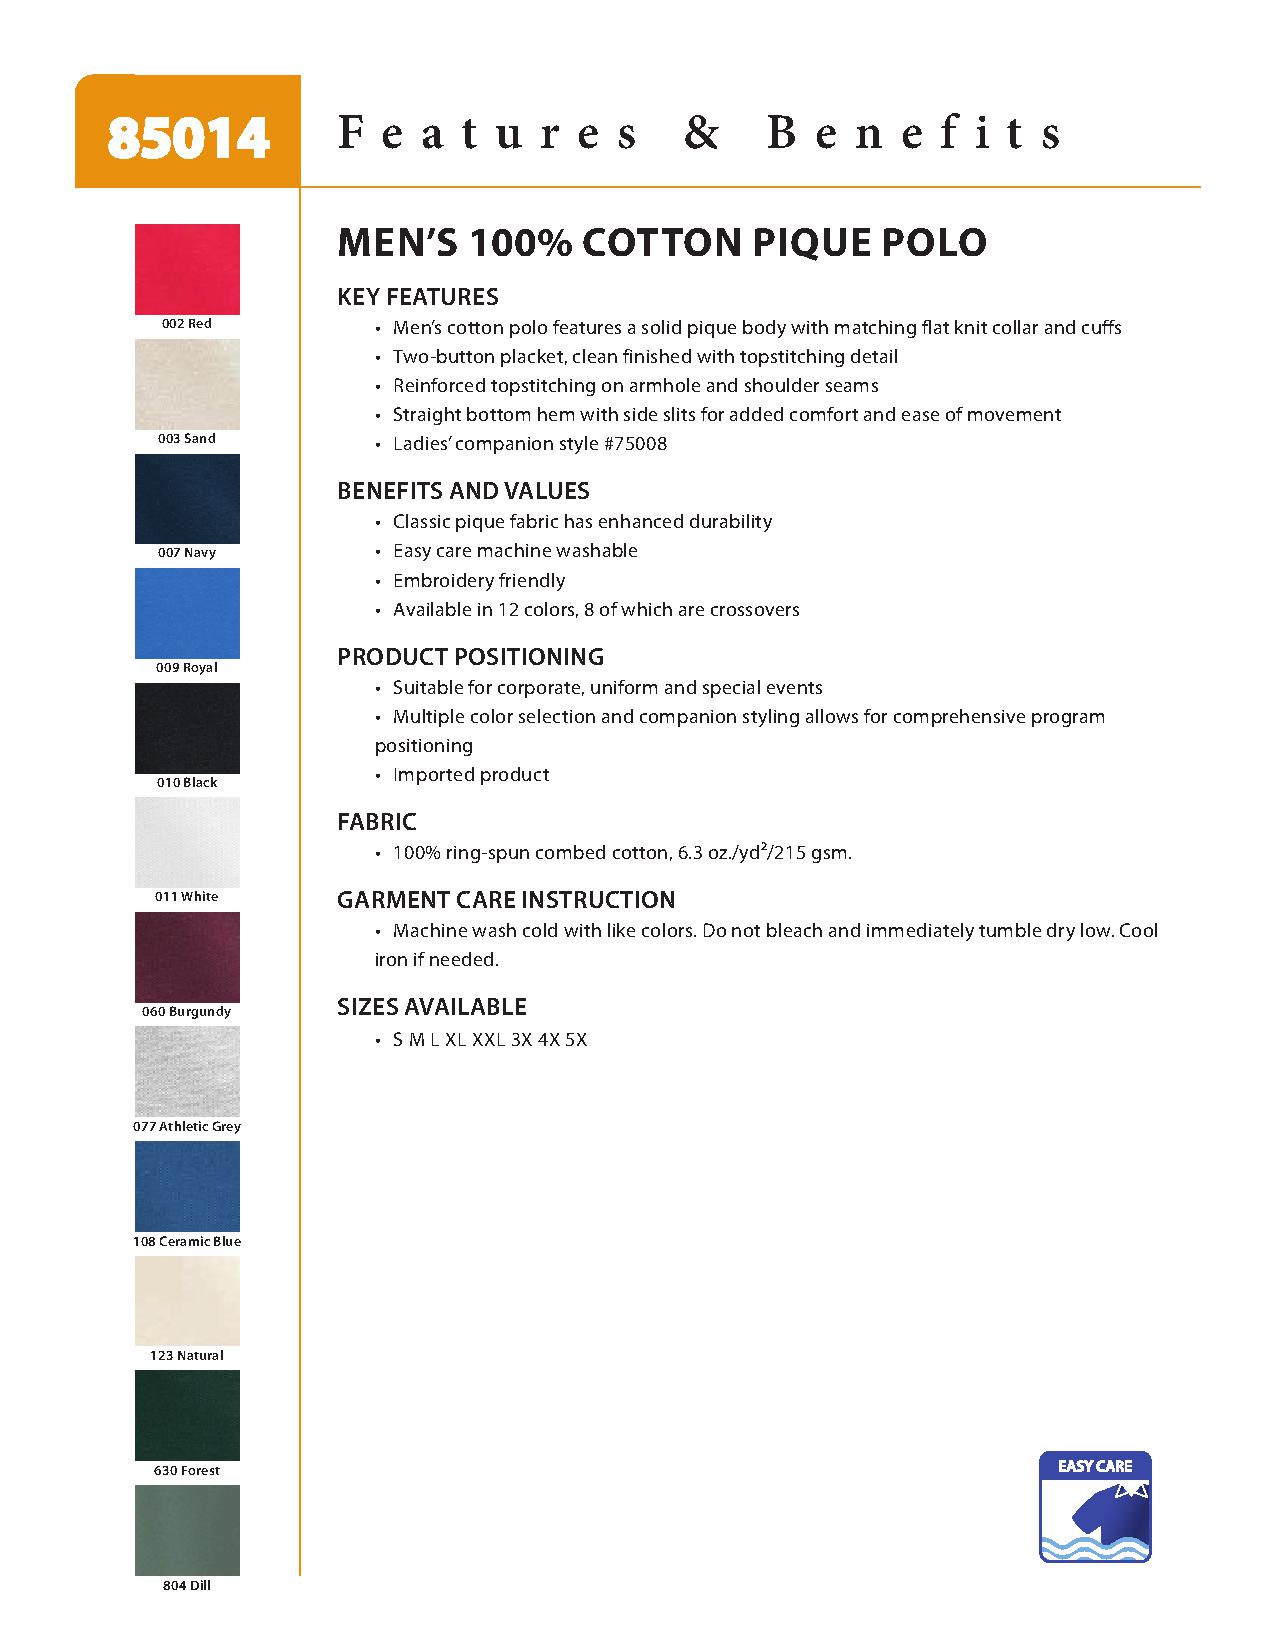 Ash City Pique 85014 - Men's One Hundred Percent Cotton Pique Polo